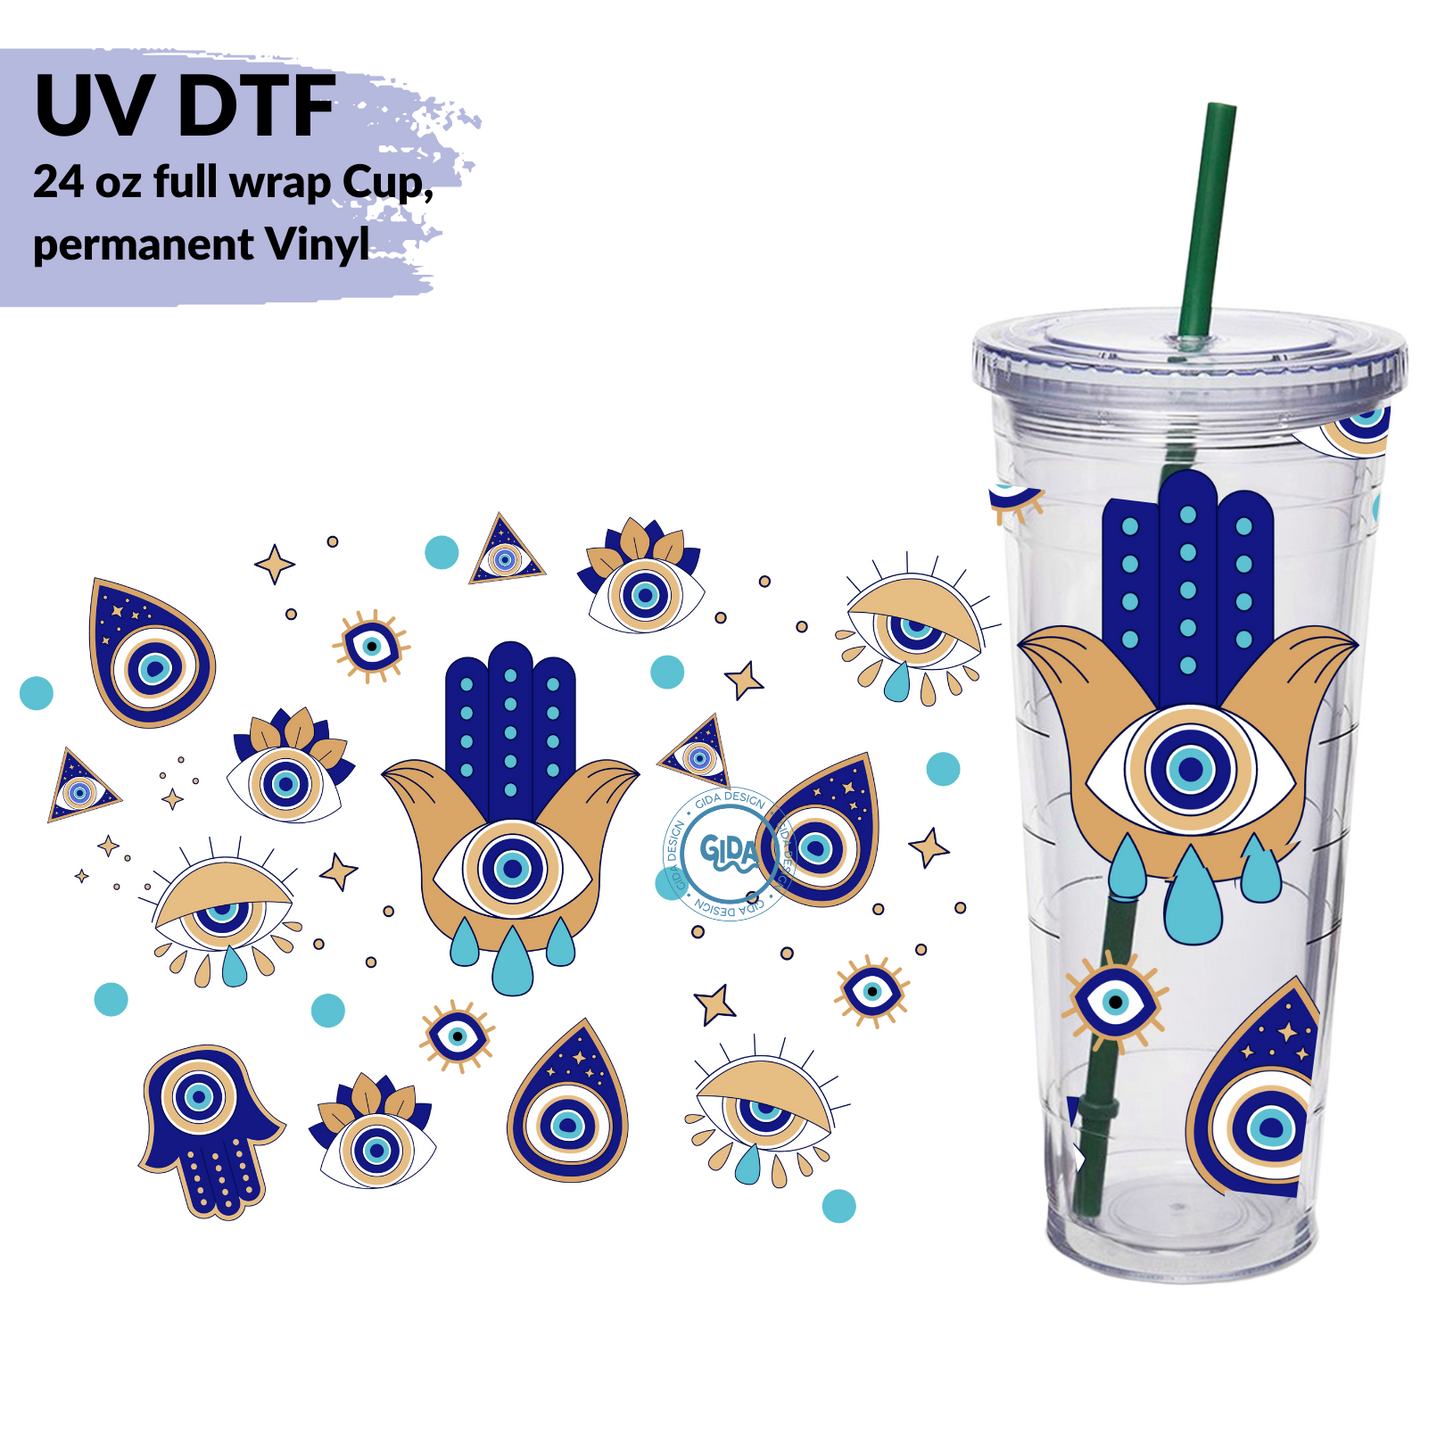 UV DTF -  Magic Blue Eyes 24 oz Permanent wrap